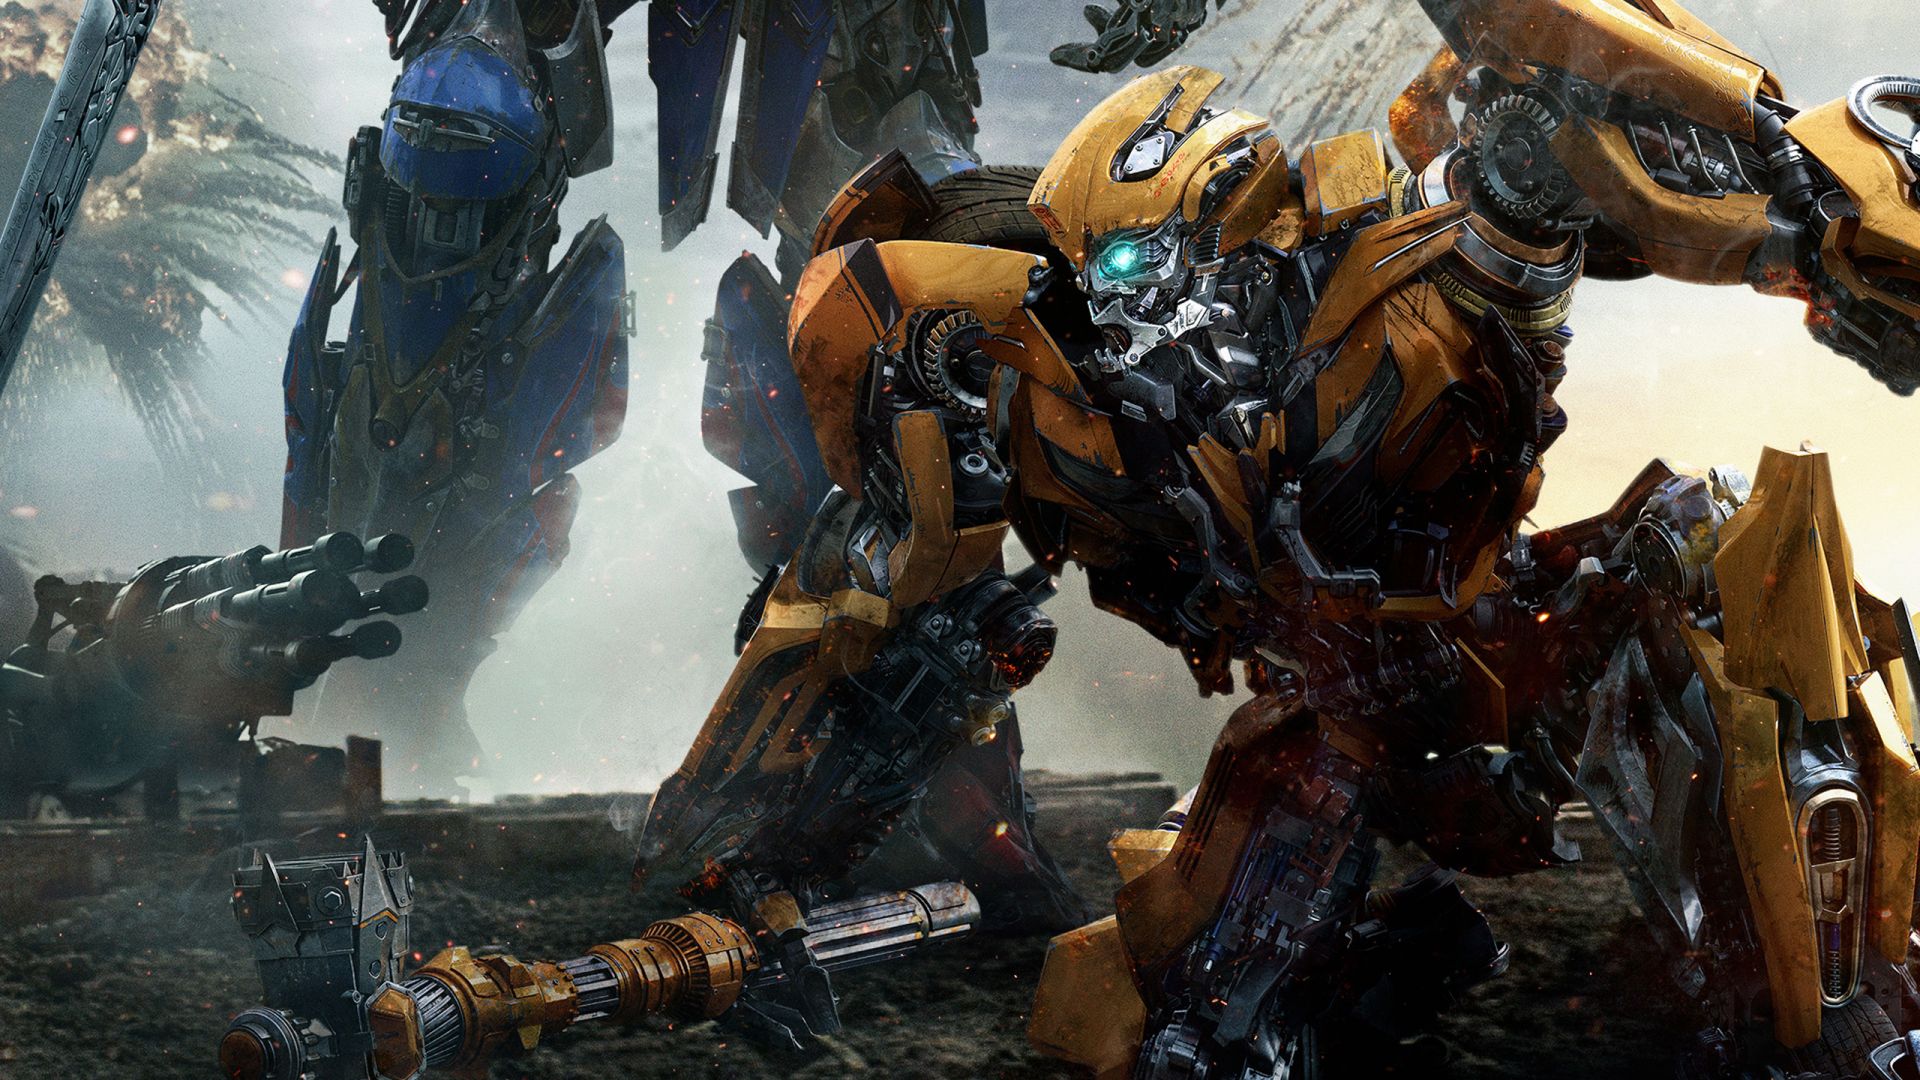 Wallpaper Bumblebee, Transformers: the last knight, movie, cyborg